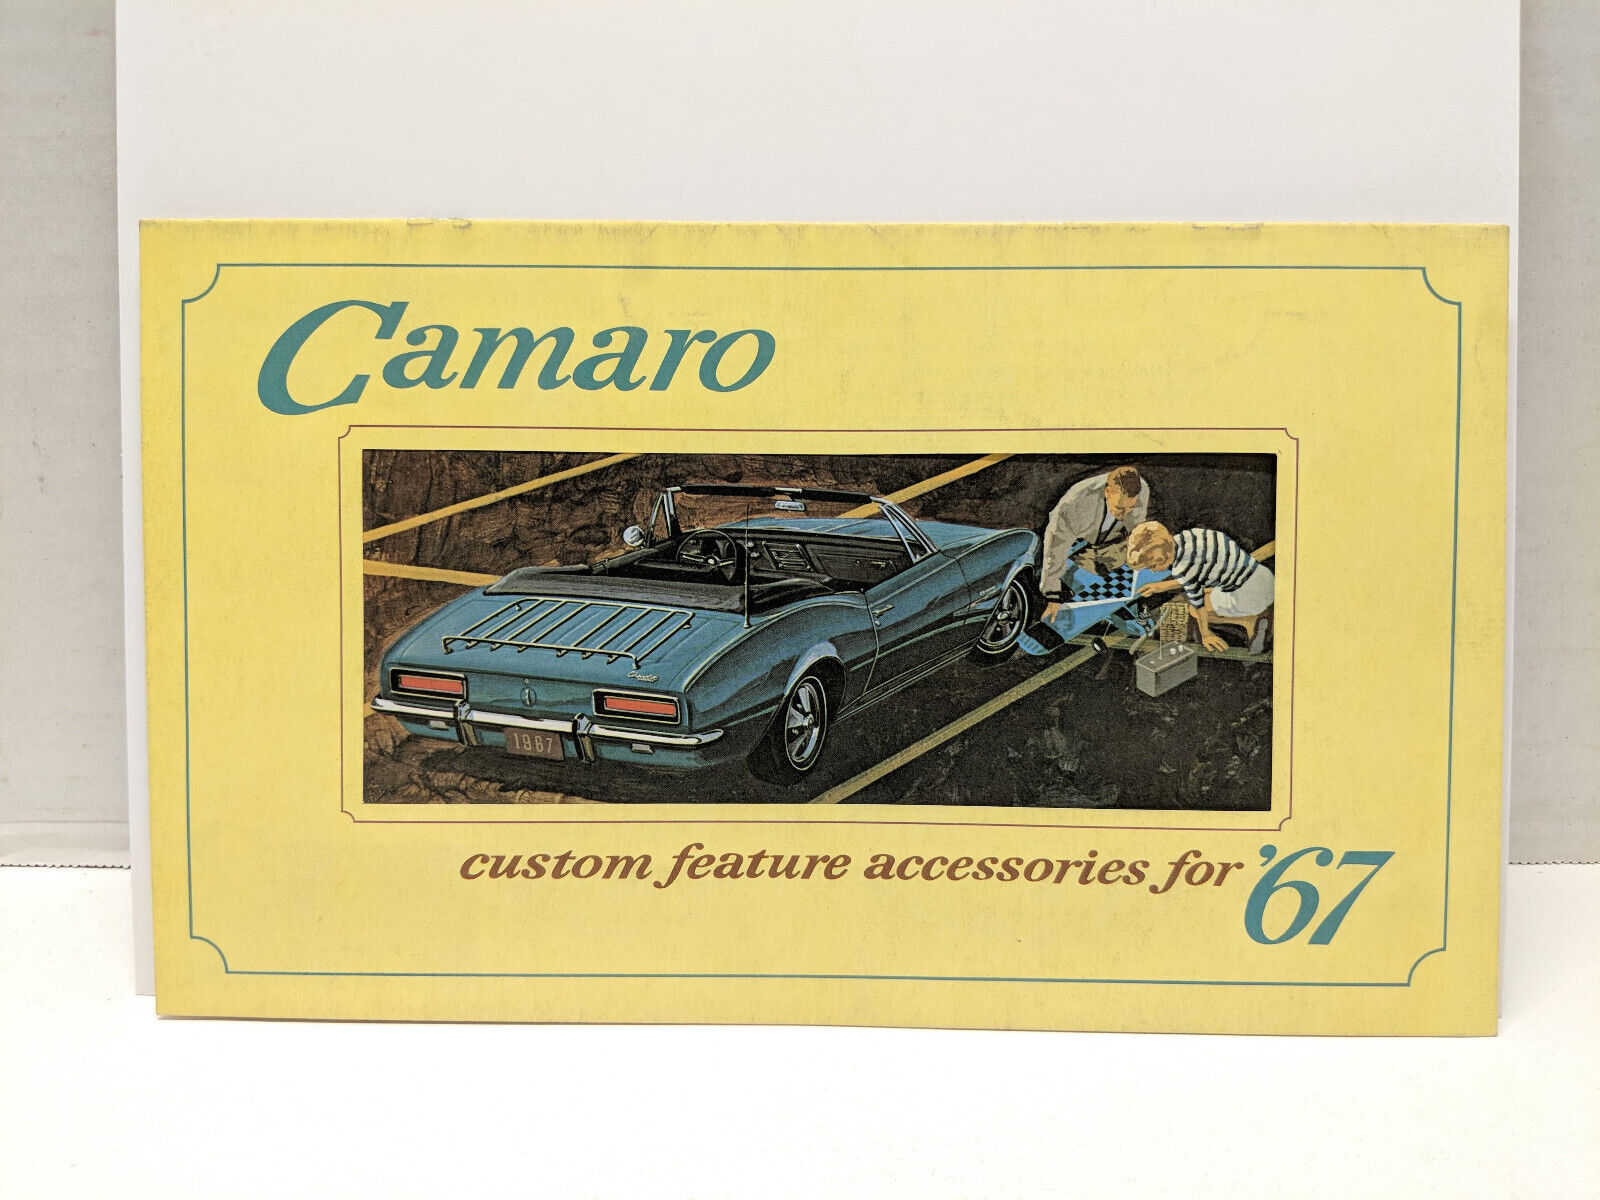 Original 1967 Chevrolet Camaro Custom Feature Accessories Sales Brochure